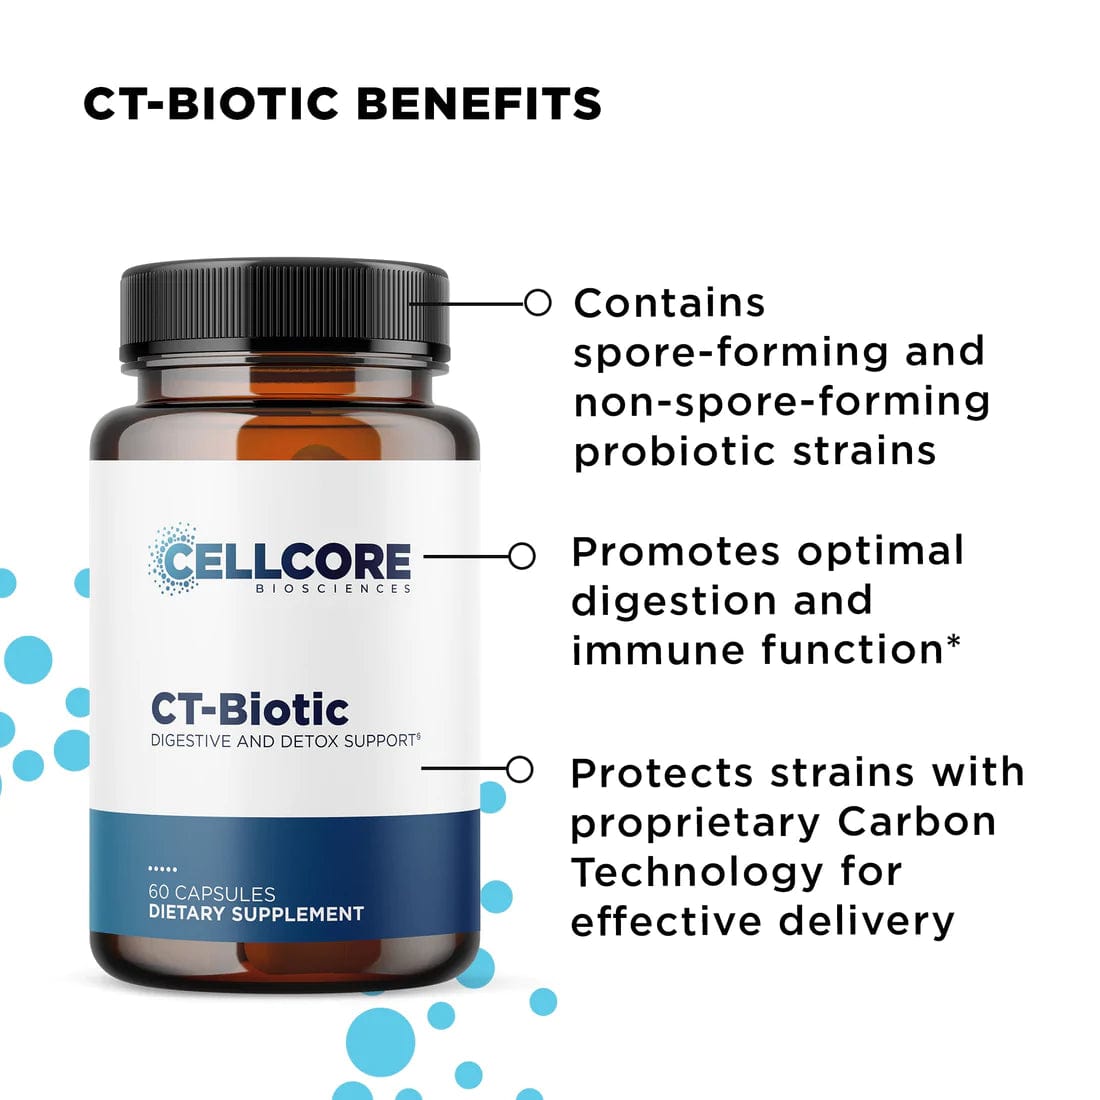 CellCore Biosciences Nutritional Advanced MYC Support Kit by CellCore Biosciences